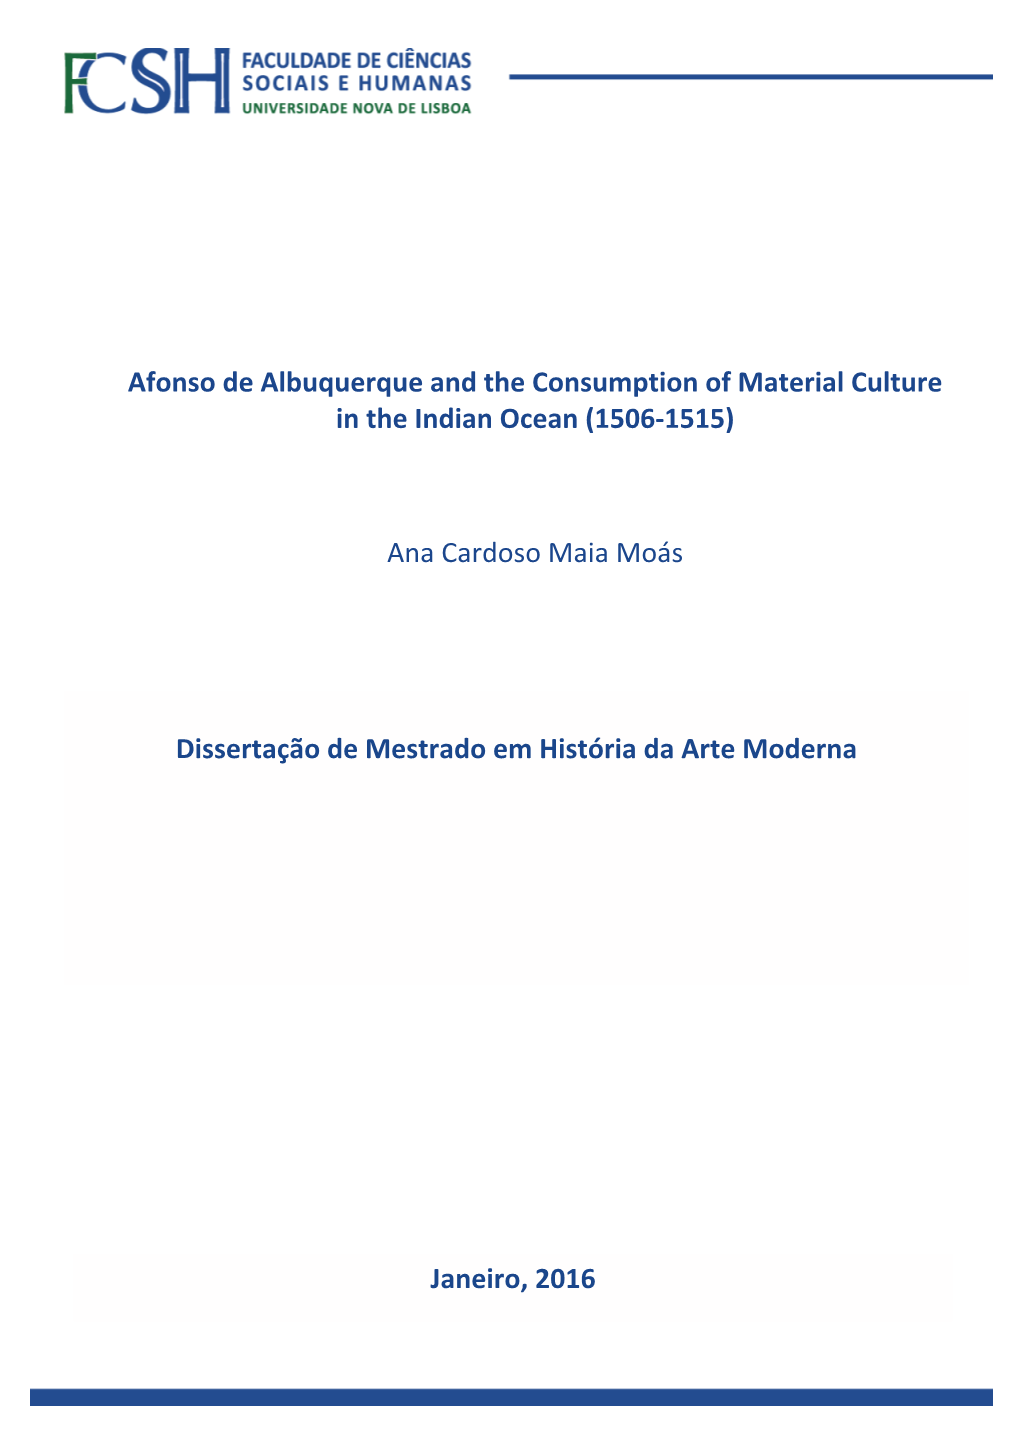 Afonso De Albuquerque and the Consumption of Material Culture in the Indian Ocean (1506-1515) Ana Cardoso Maia Moás Janeiro